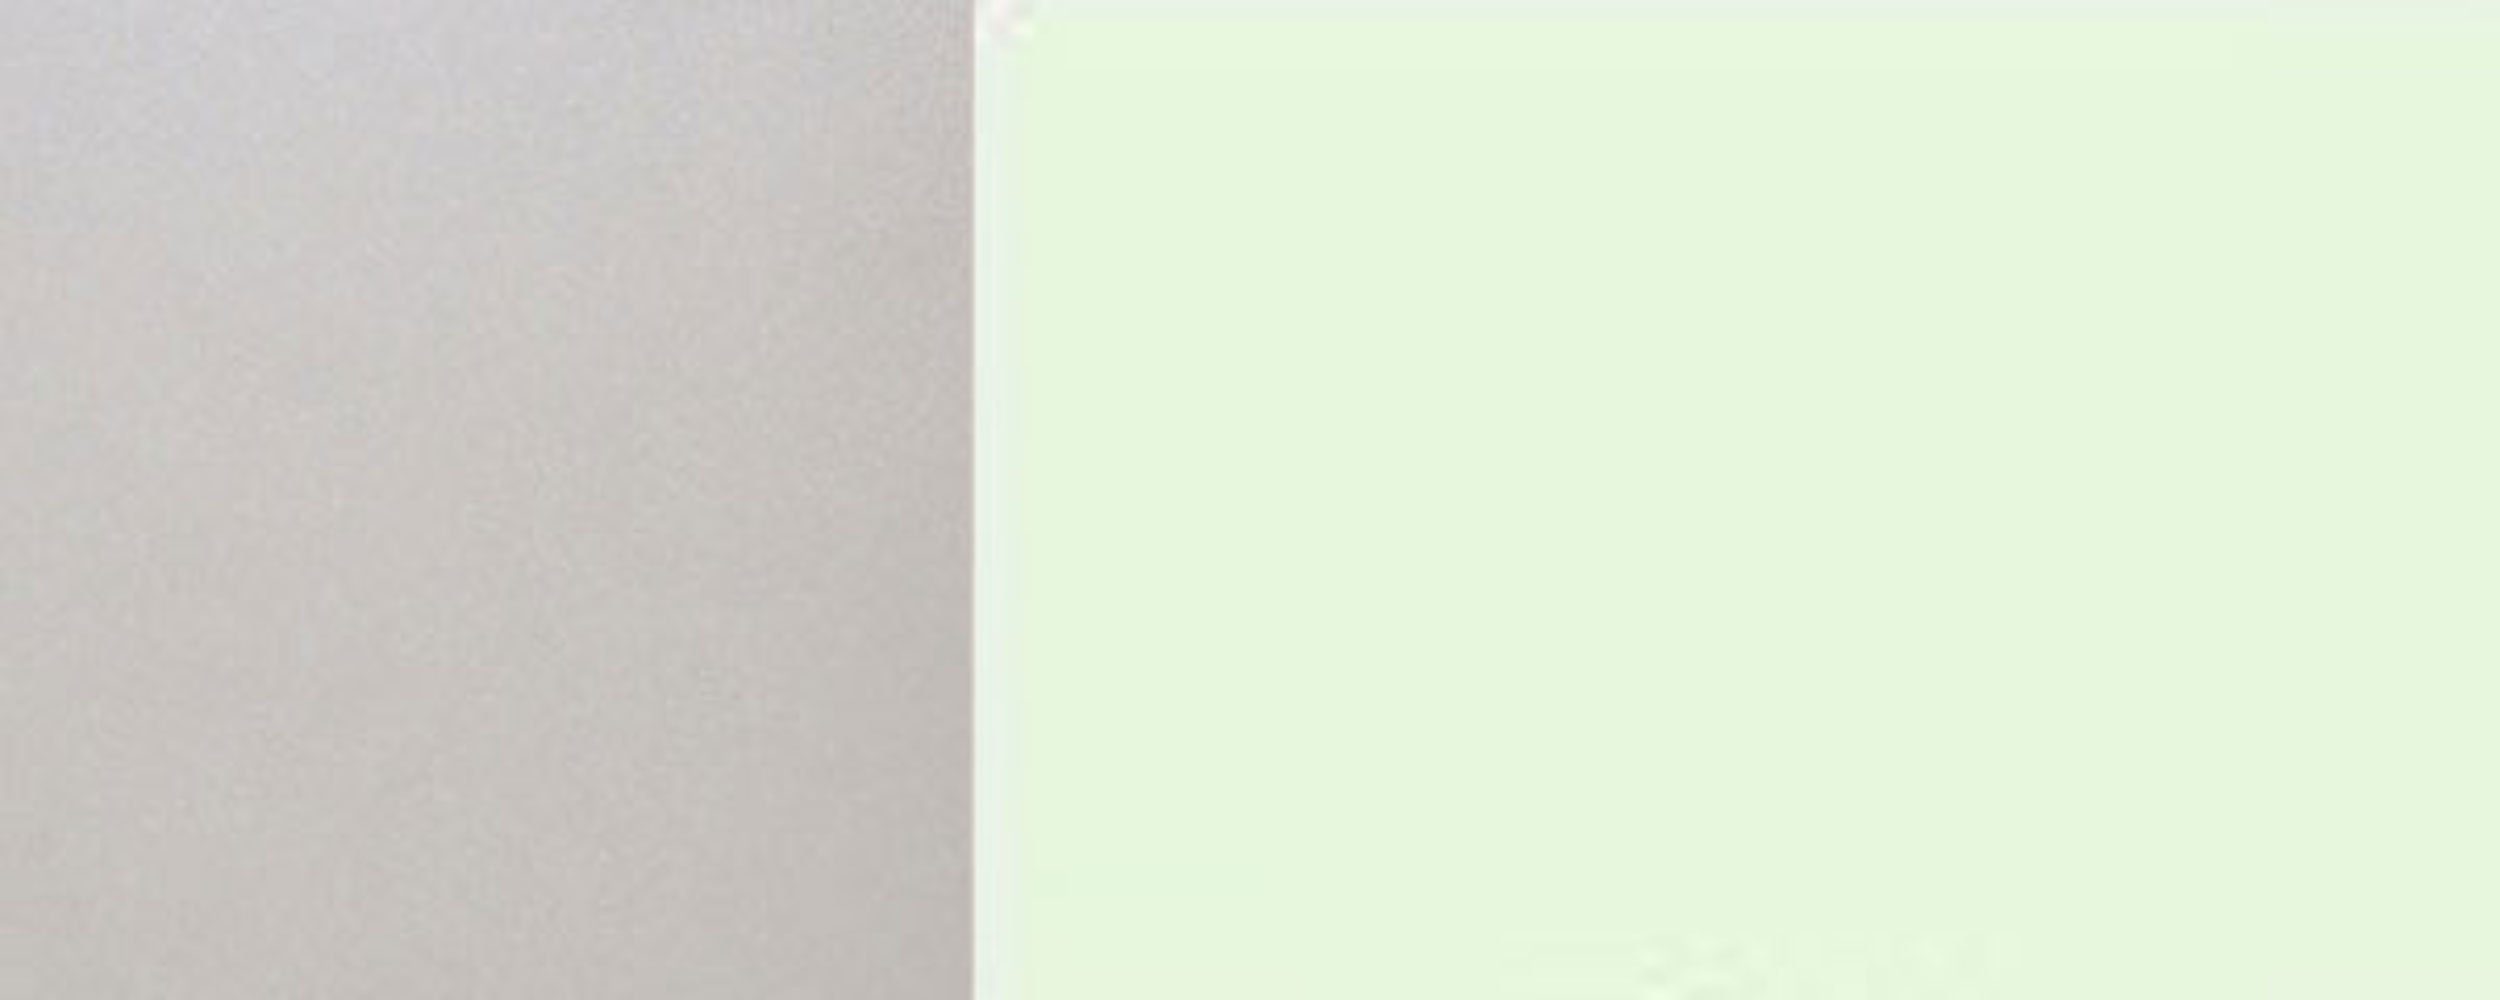 Feldmann-Wohnen Backofenumbauschrank chiaro pastello 1-türig Schubladen (Pescara) (Teilauszug) wählbar 0183 Front- 60cm Pescara & 3 Korpusfarbe Verde